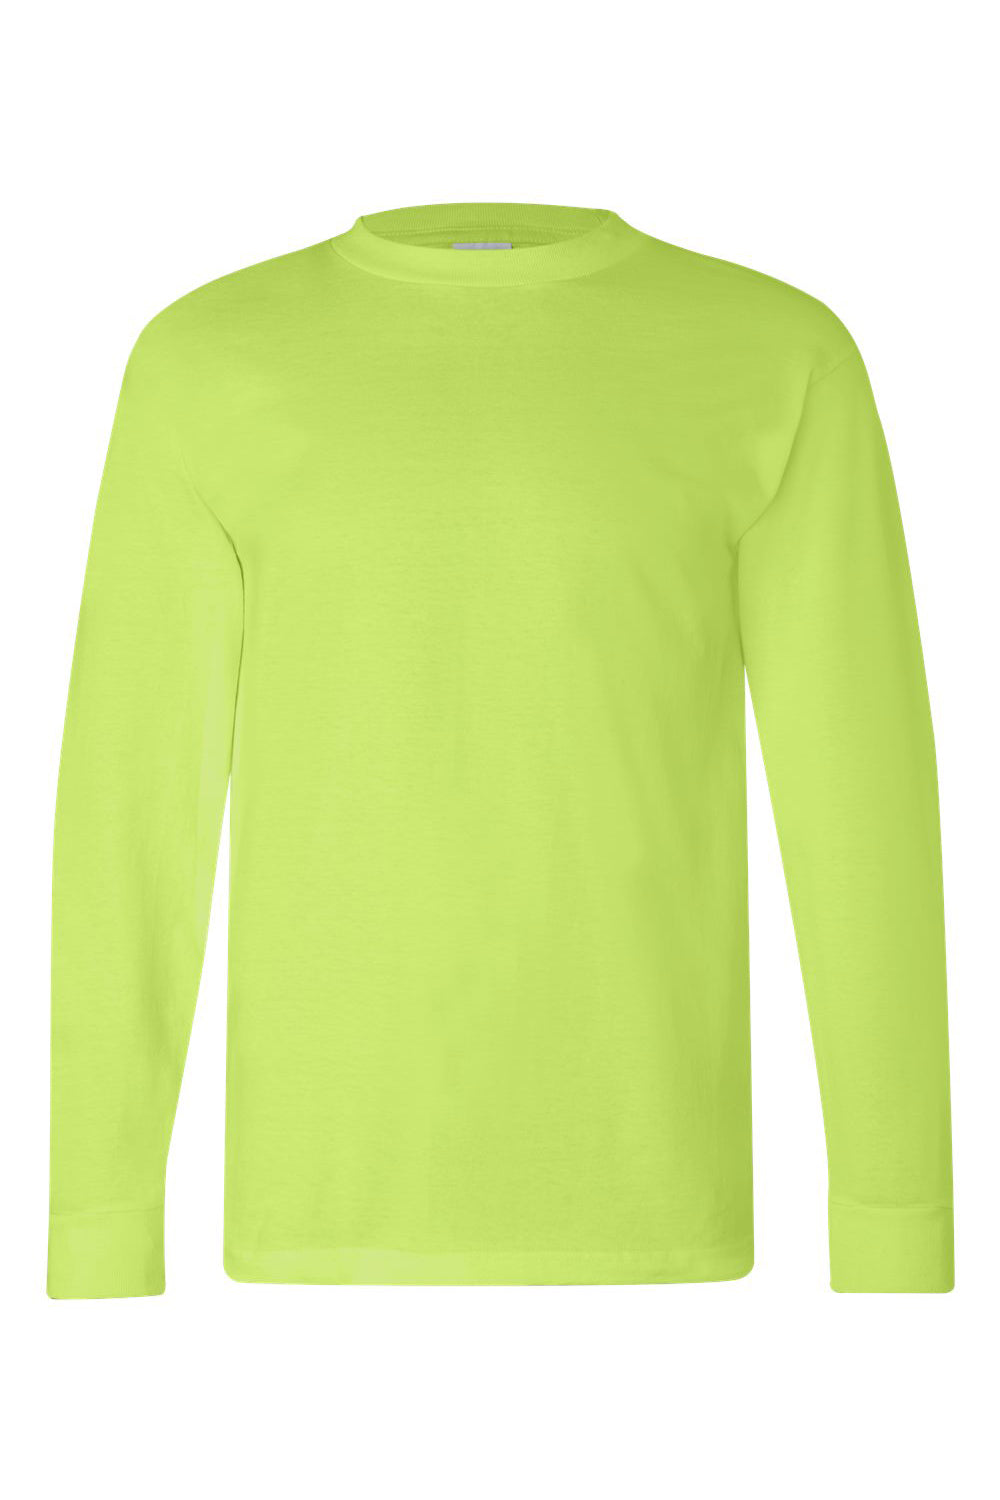 Bayside BA6100 Mens USA Made Long Sleeve Crewneck T-Shirt Lime Green Flat Front